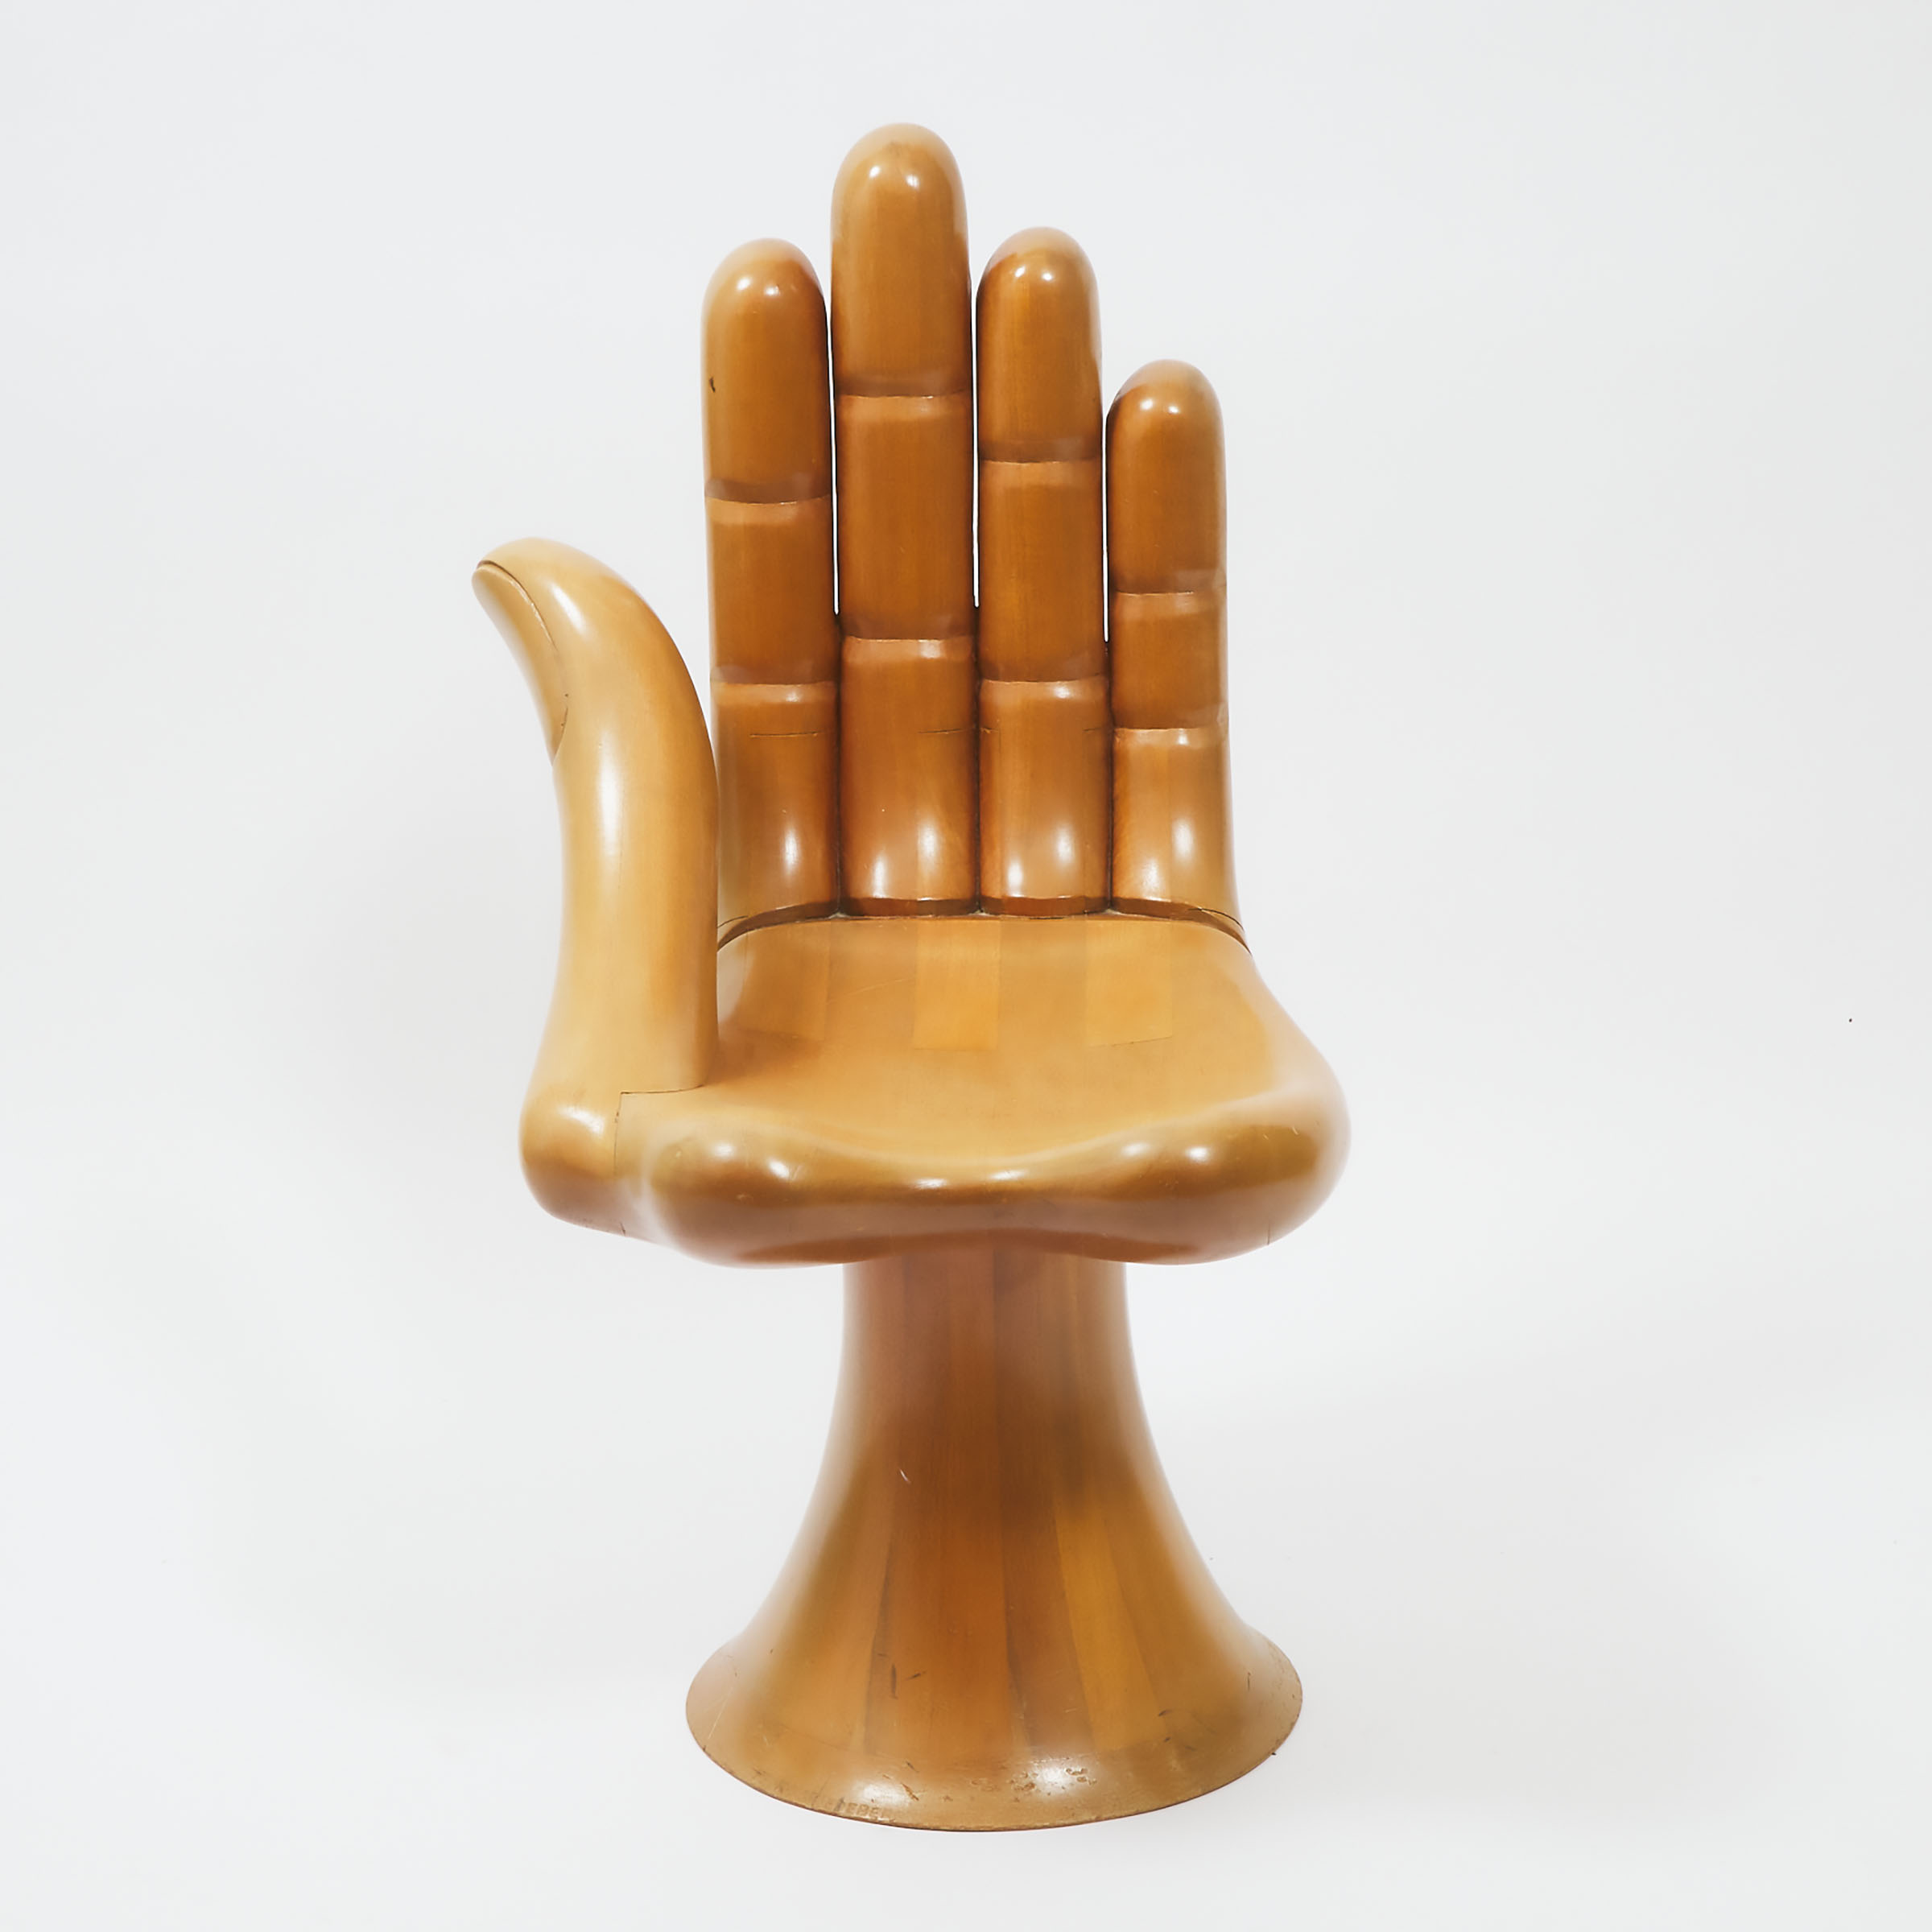 Pedro Friedeberg (Mexican/Italian, b.1937) Hand Chair, c.1965